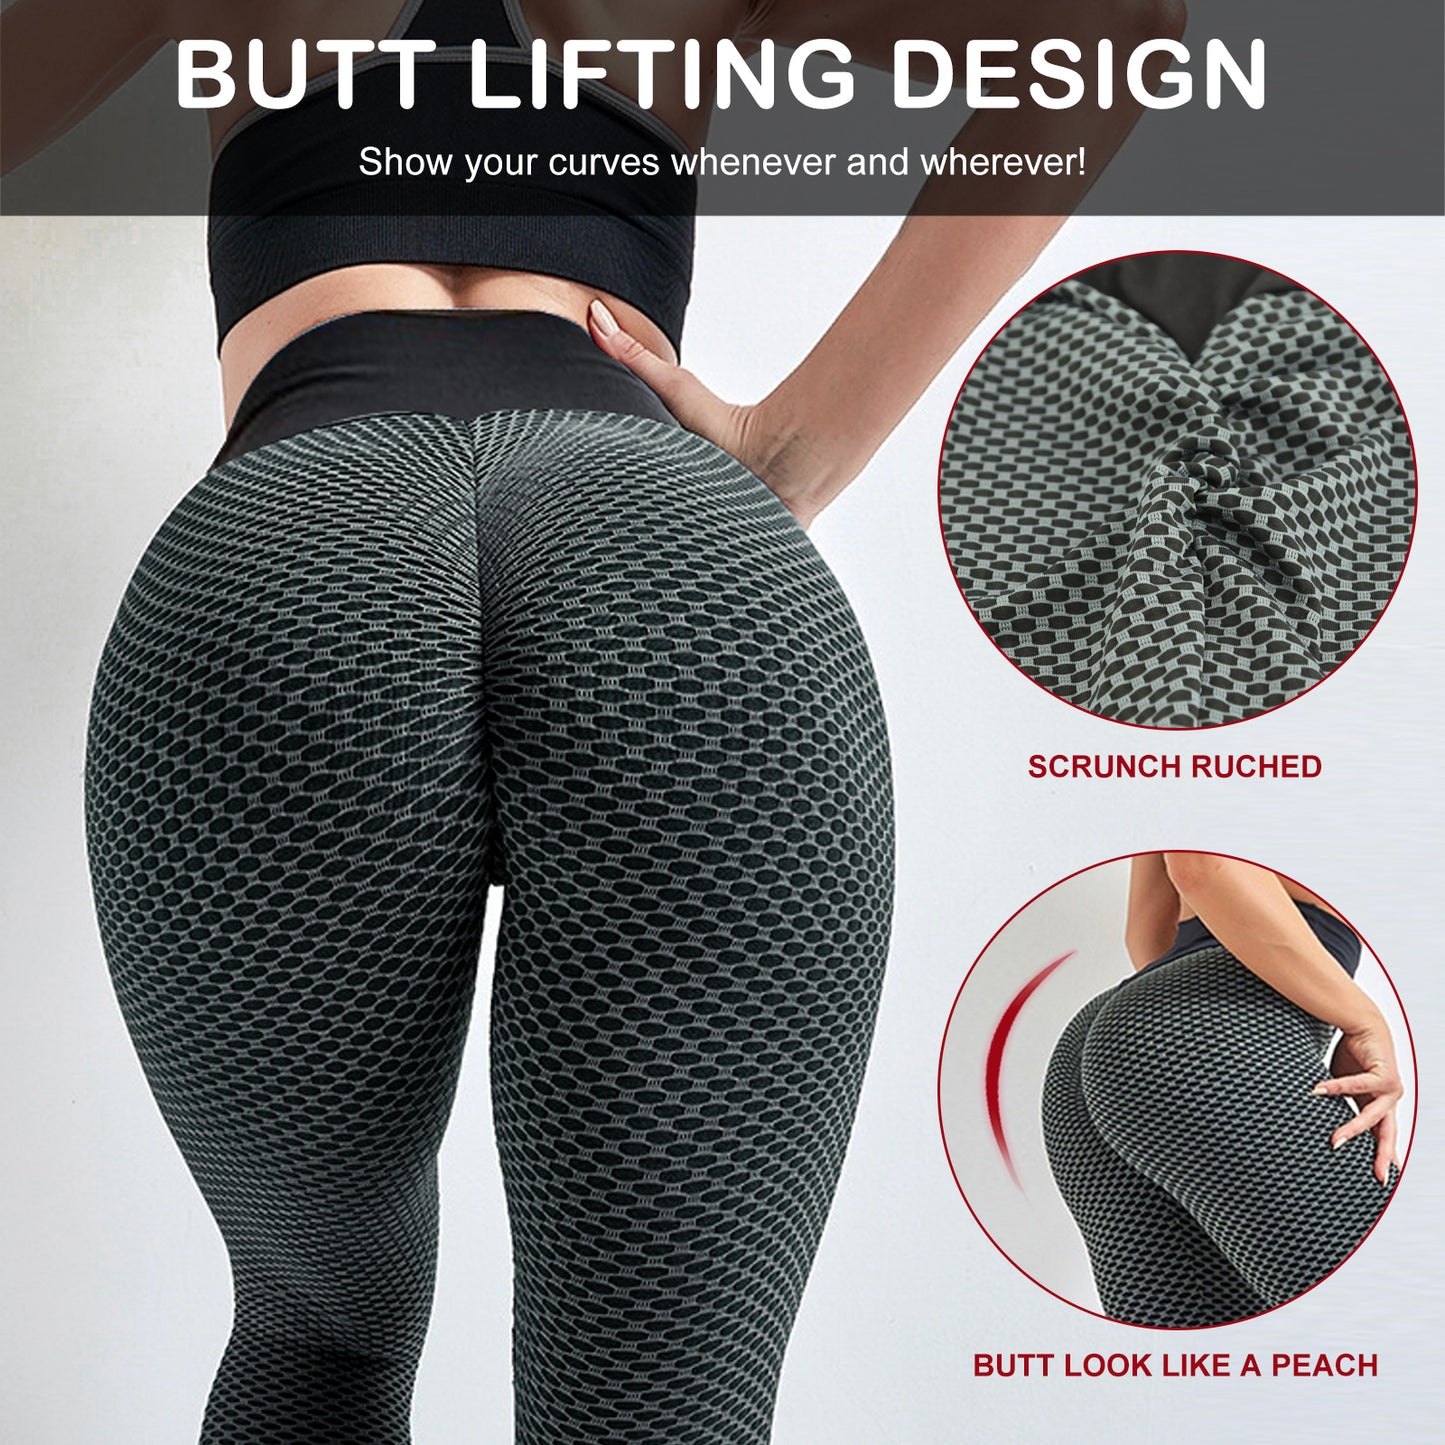 TIK Tok Leggings Women Butt Lifting Workout Tights Plus Size Sports High Waist Yoga Pants Small Amazon Banned - Better Life